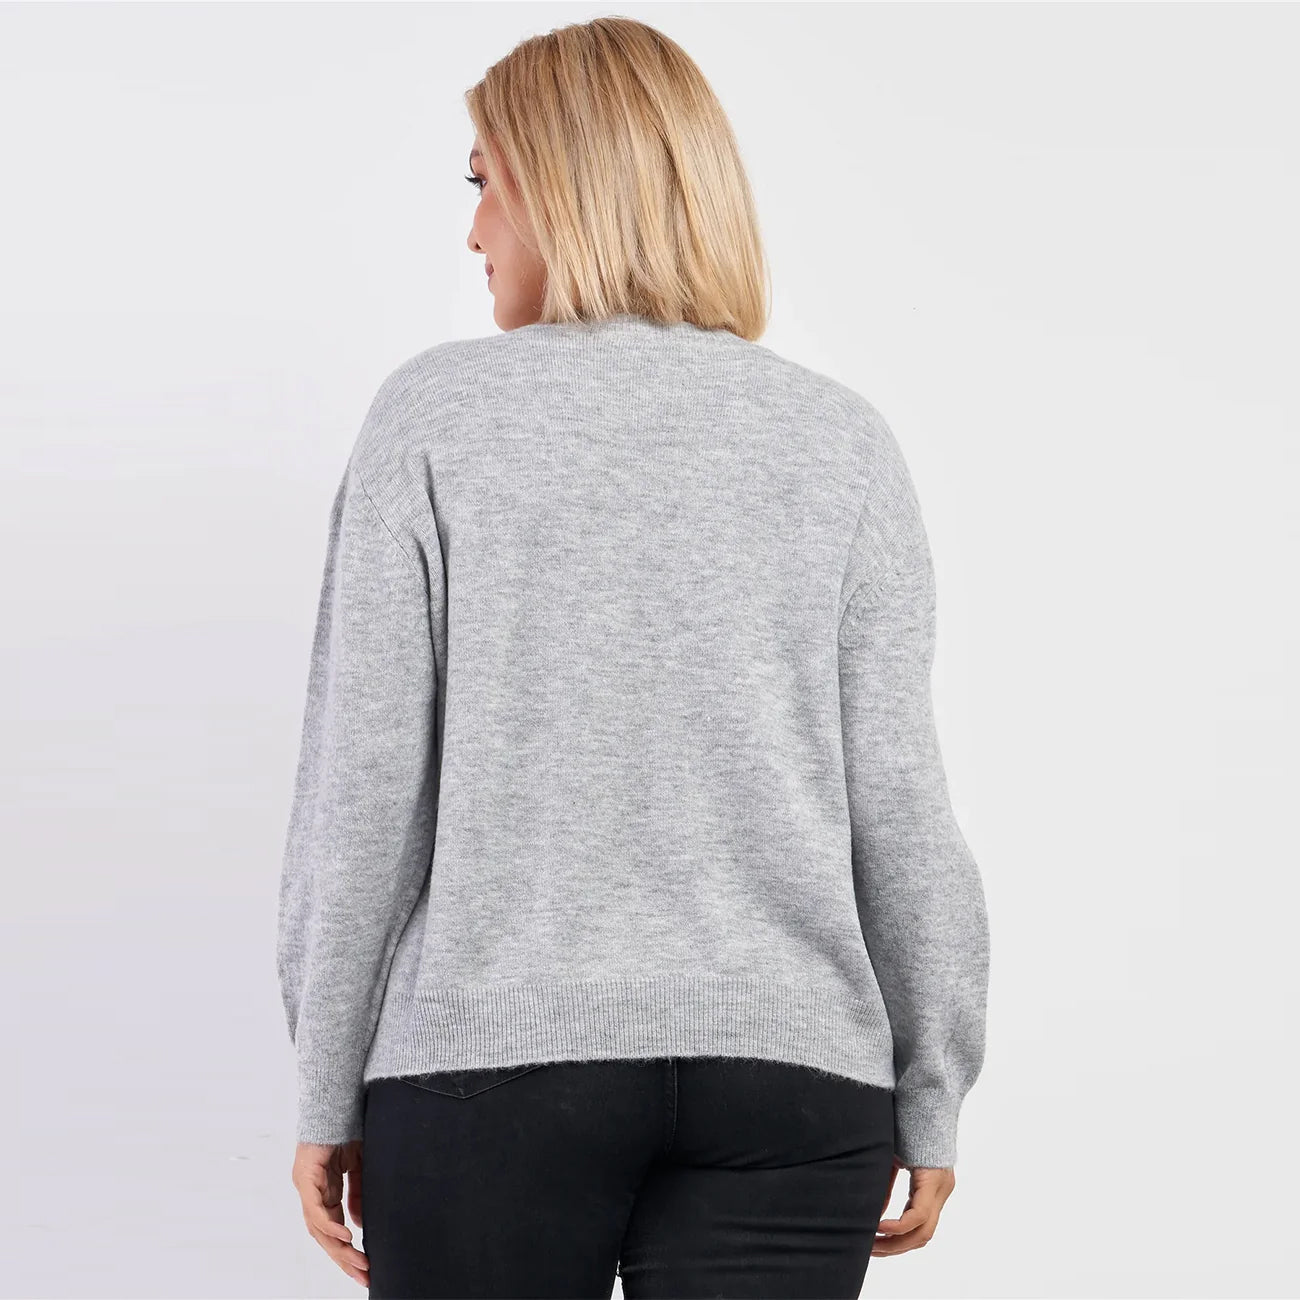 Ribbed Fleece Long Sleeve Plus Size Sweater - Grey